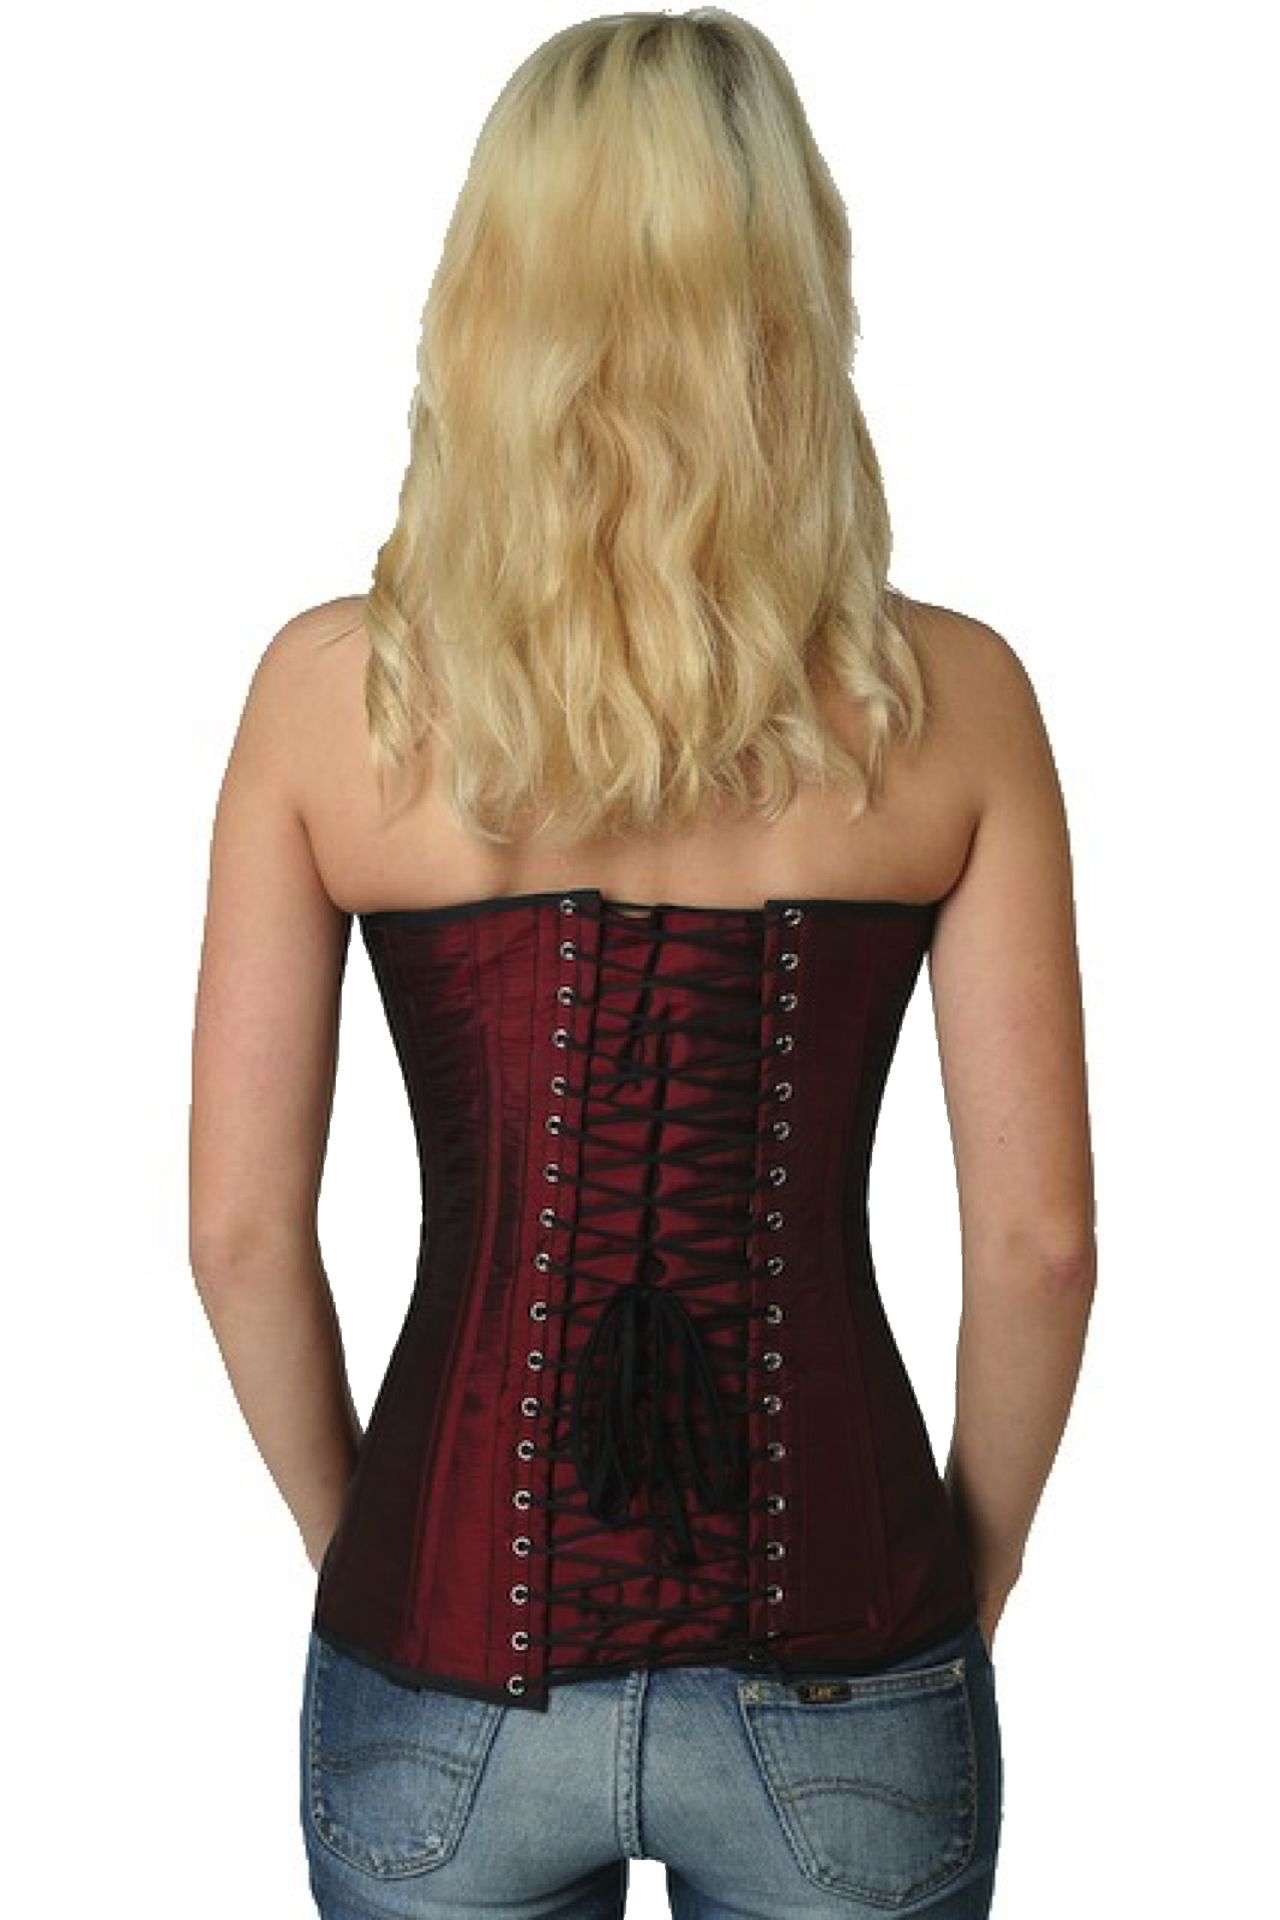 Satijn corset bordeaux rood volborst Korset sy05